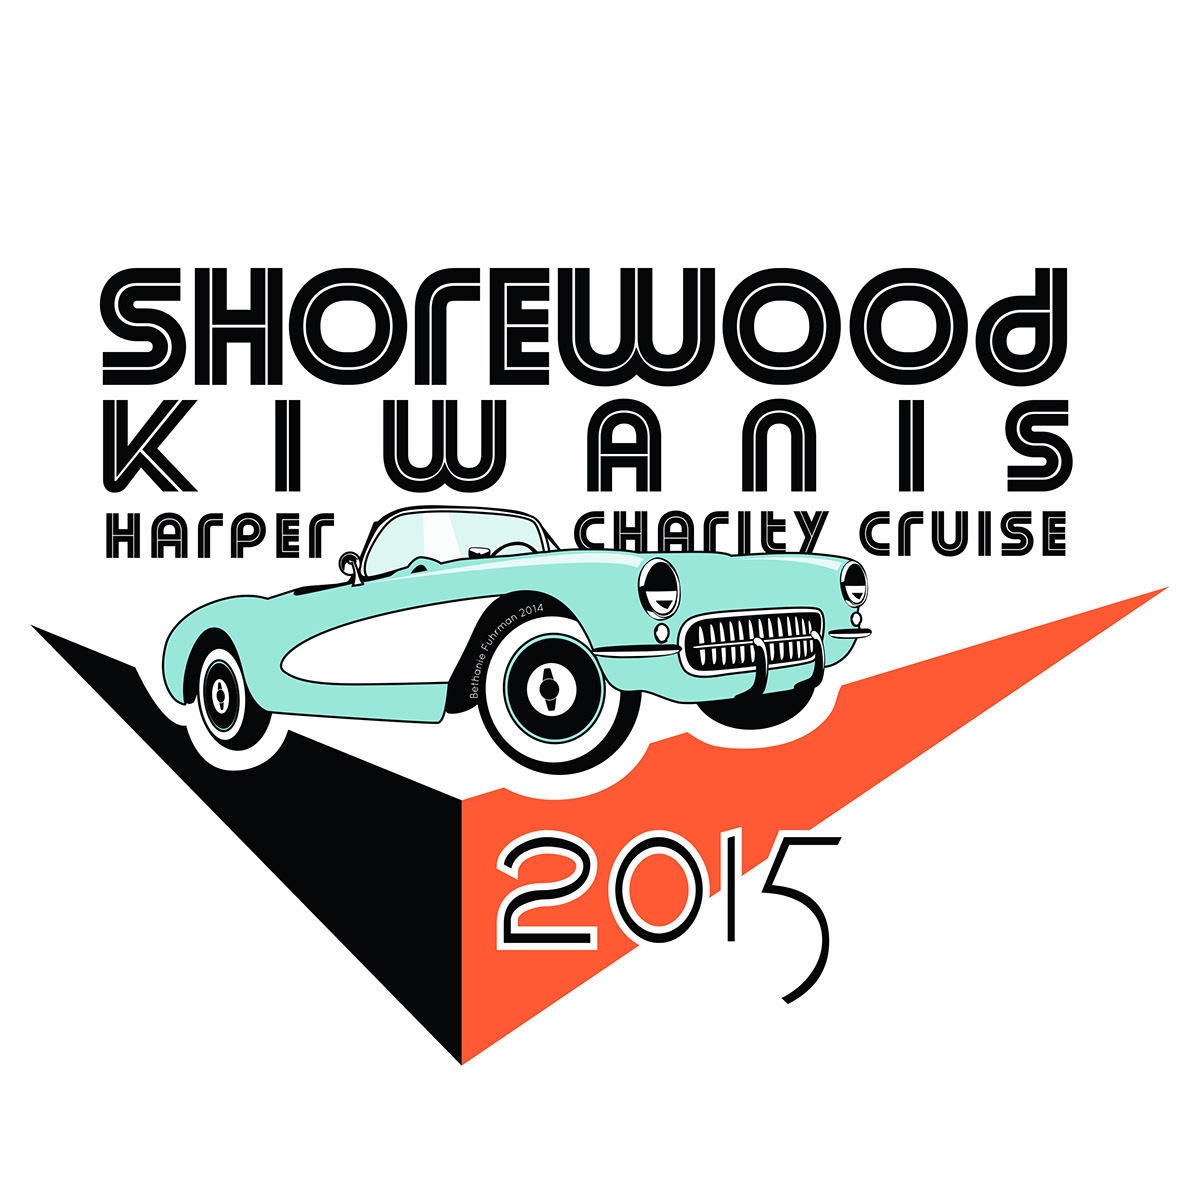 harper charity logo Event event logo Kiwanis cruise Retro Cars Illustrator Classic Cars vintage Classic